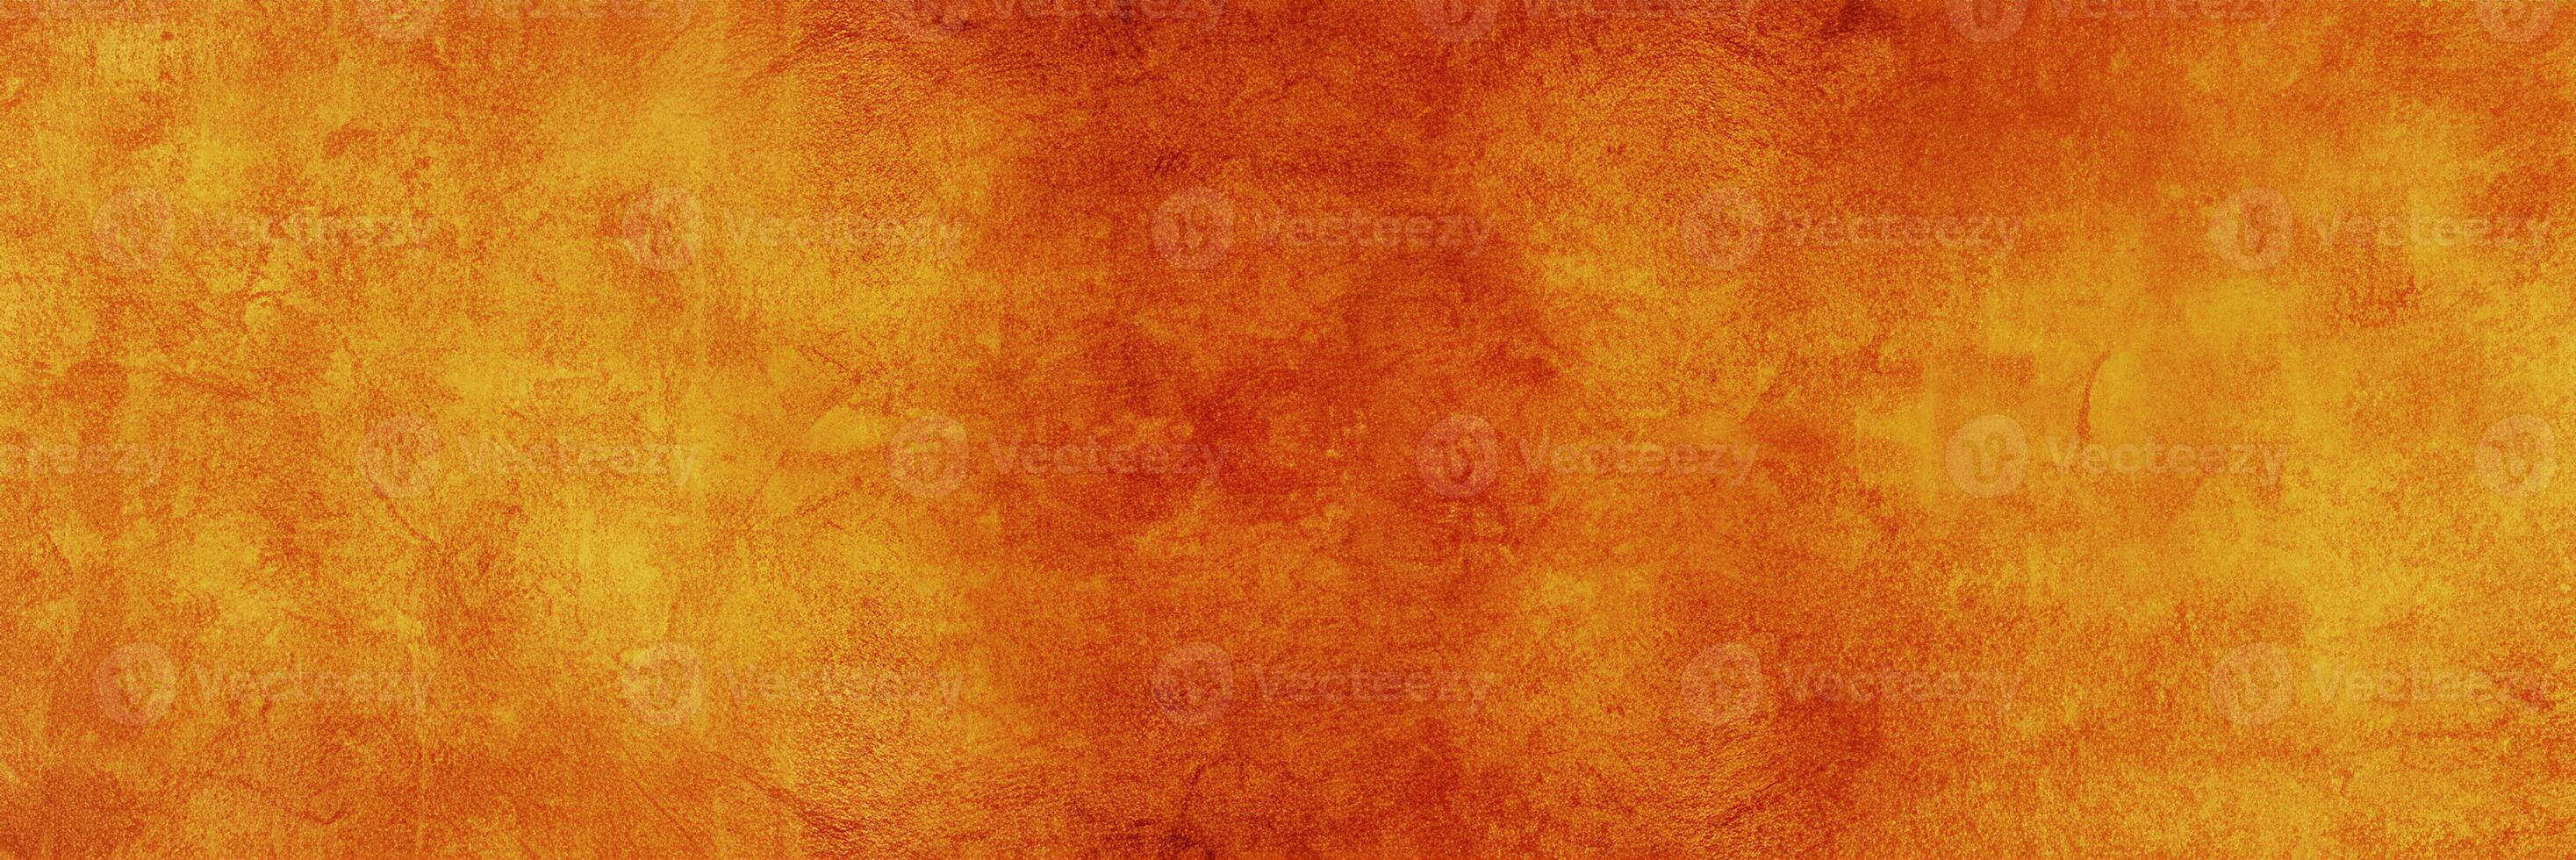 Textured Elegance, Lustrous Cement Background with Deep Orange Hue. photo